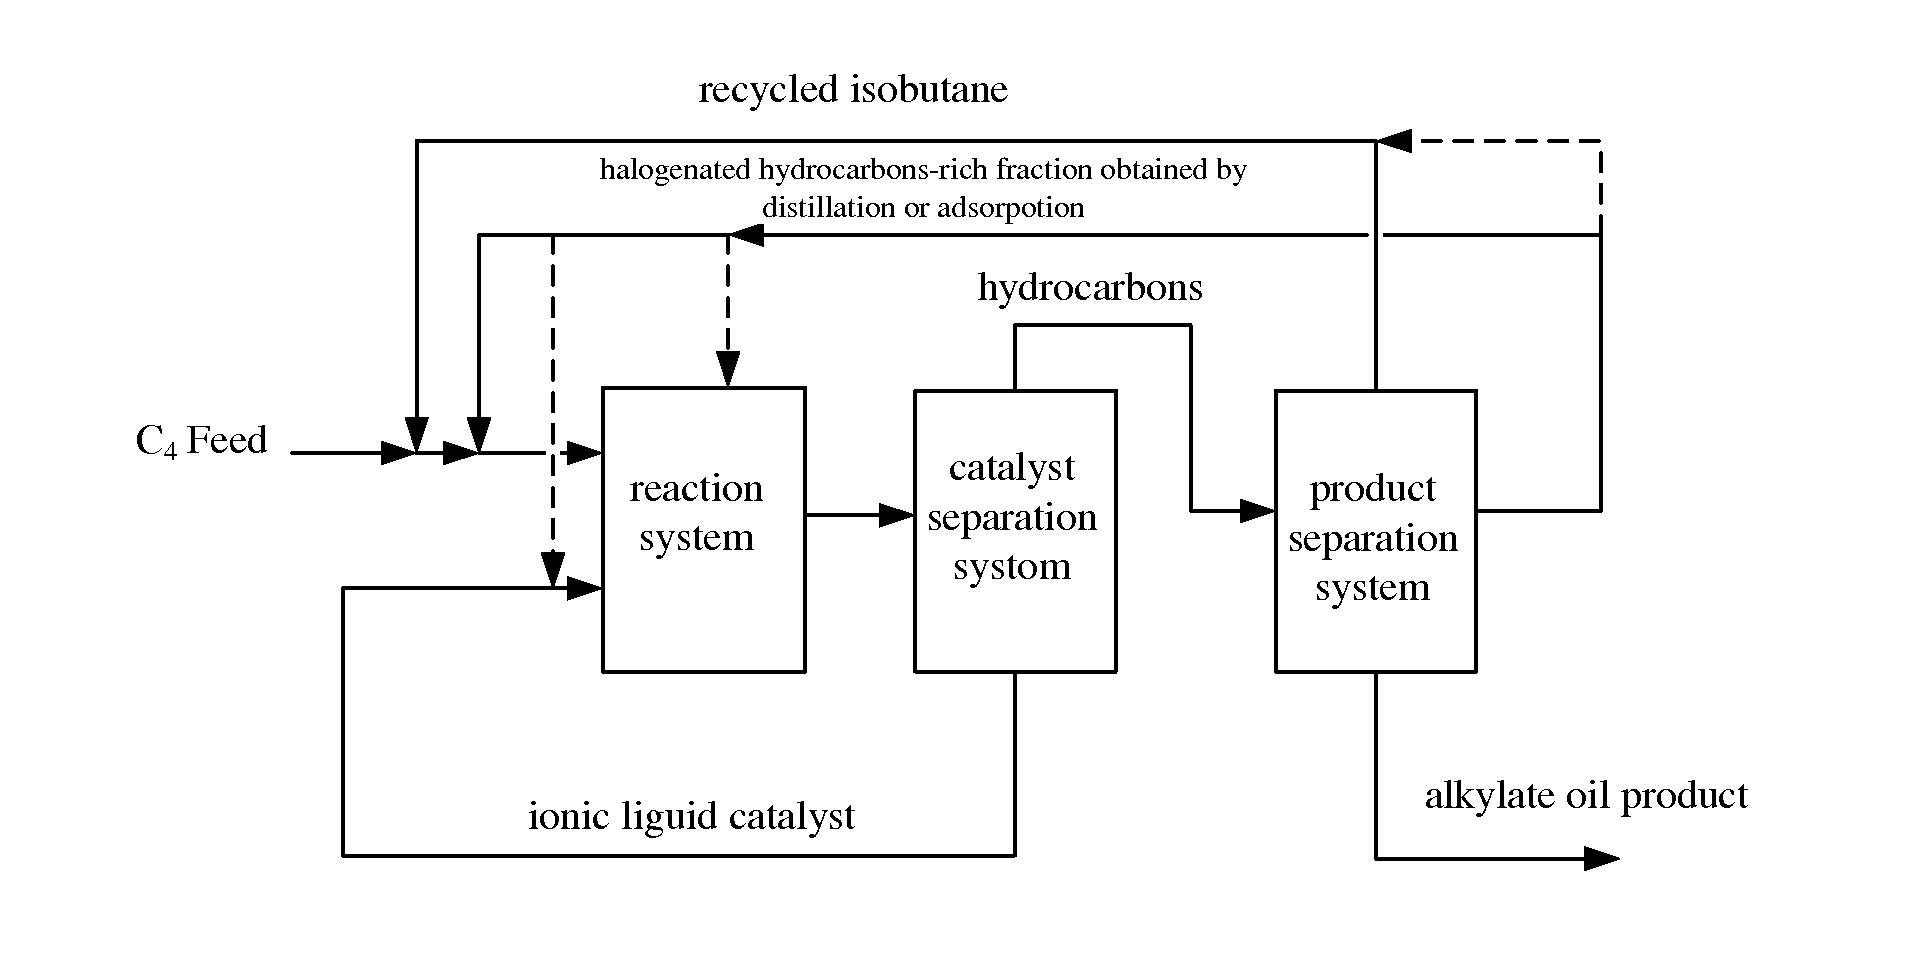 Alkylation method using ionic liquid as catalyst